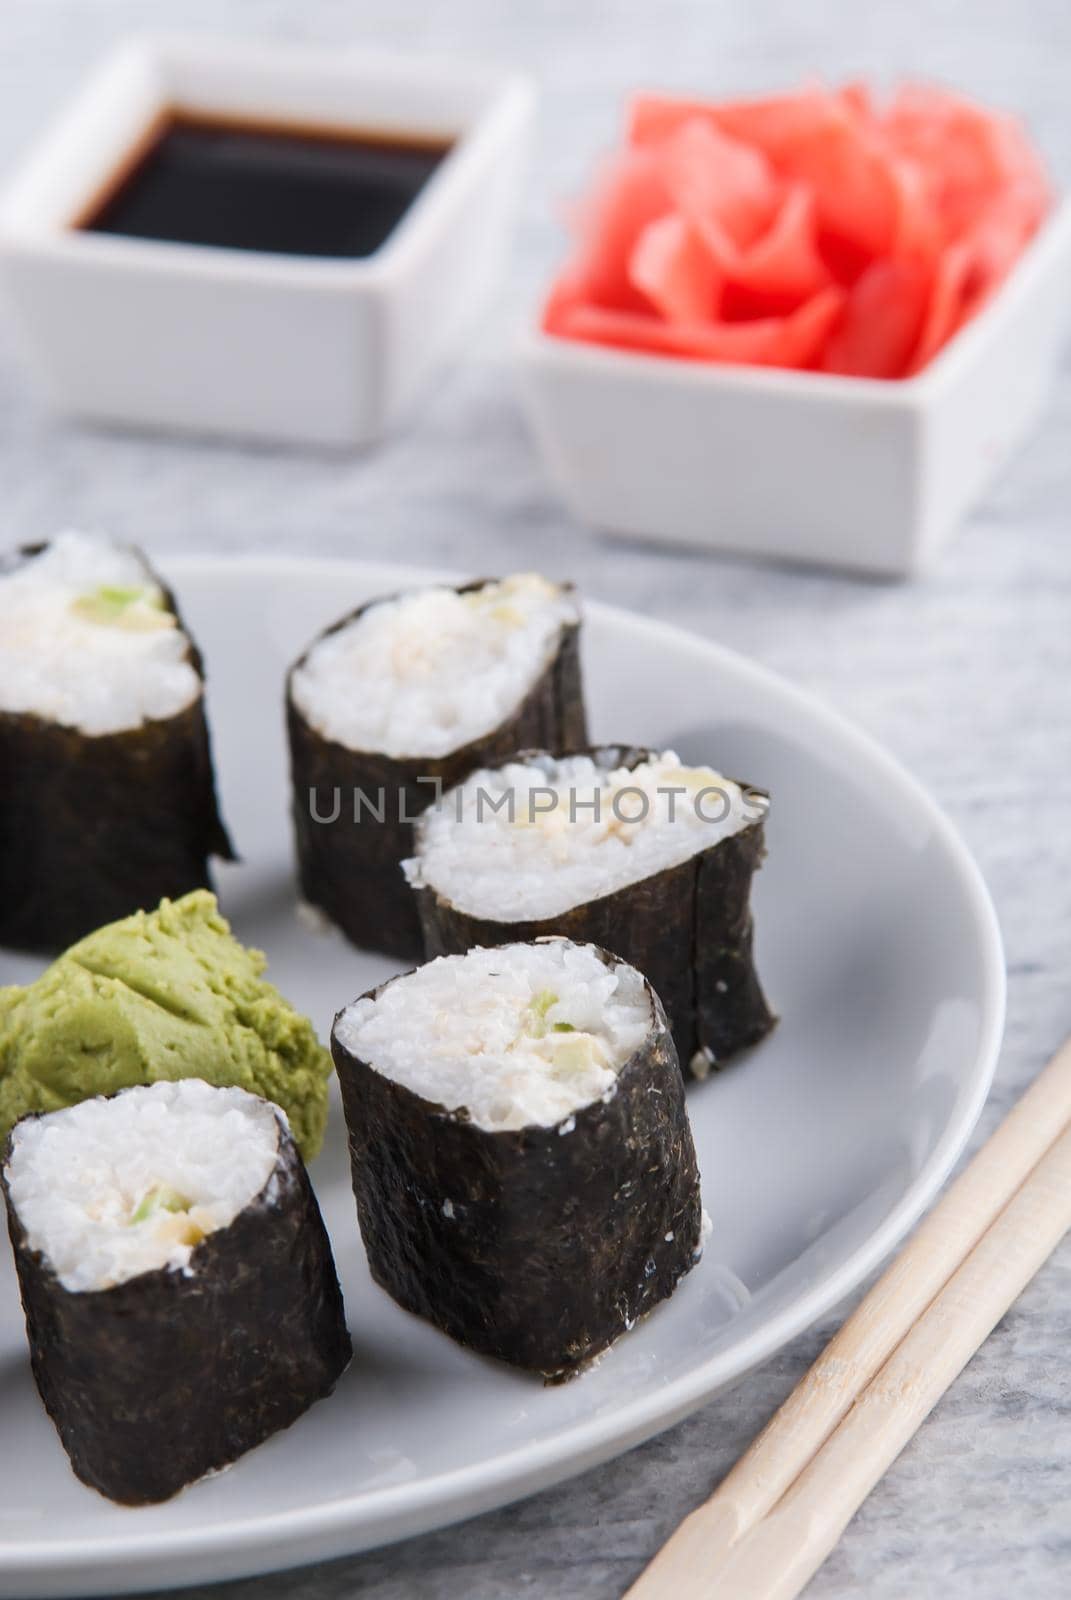 Set up of vegetarian sushi rolls. High quality photo